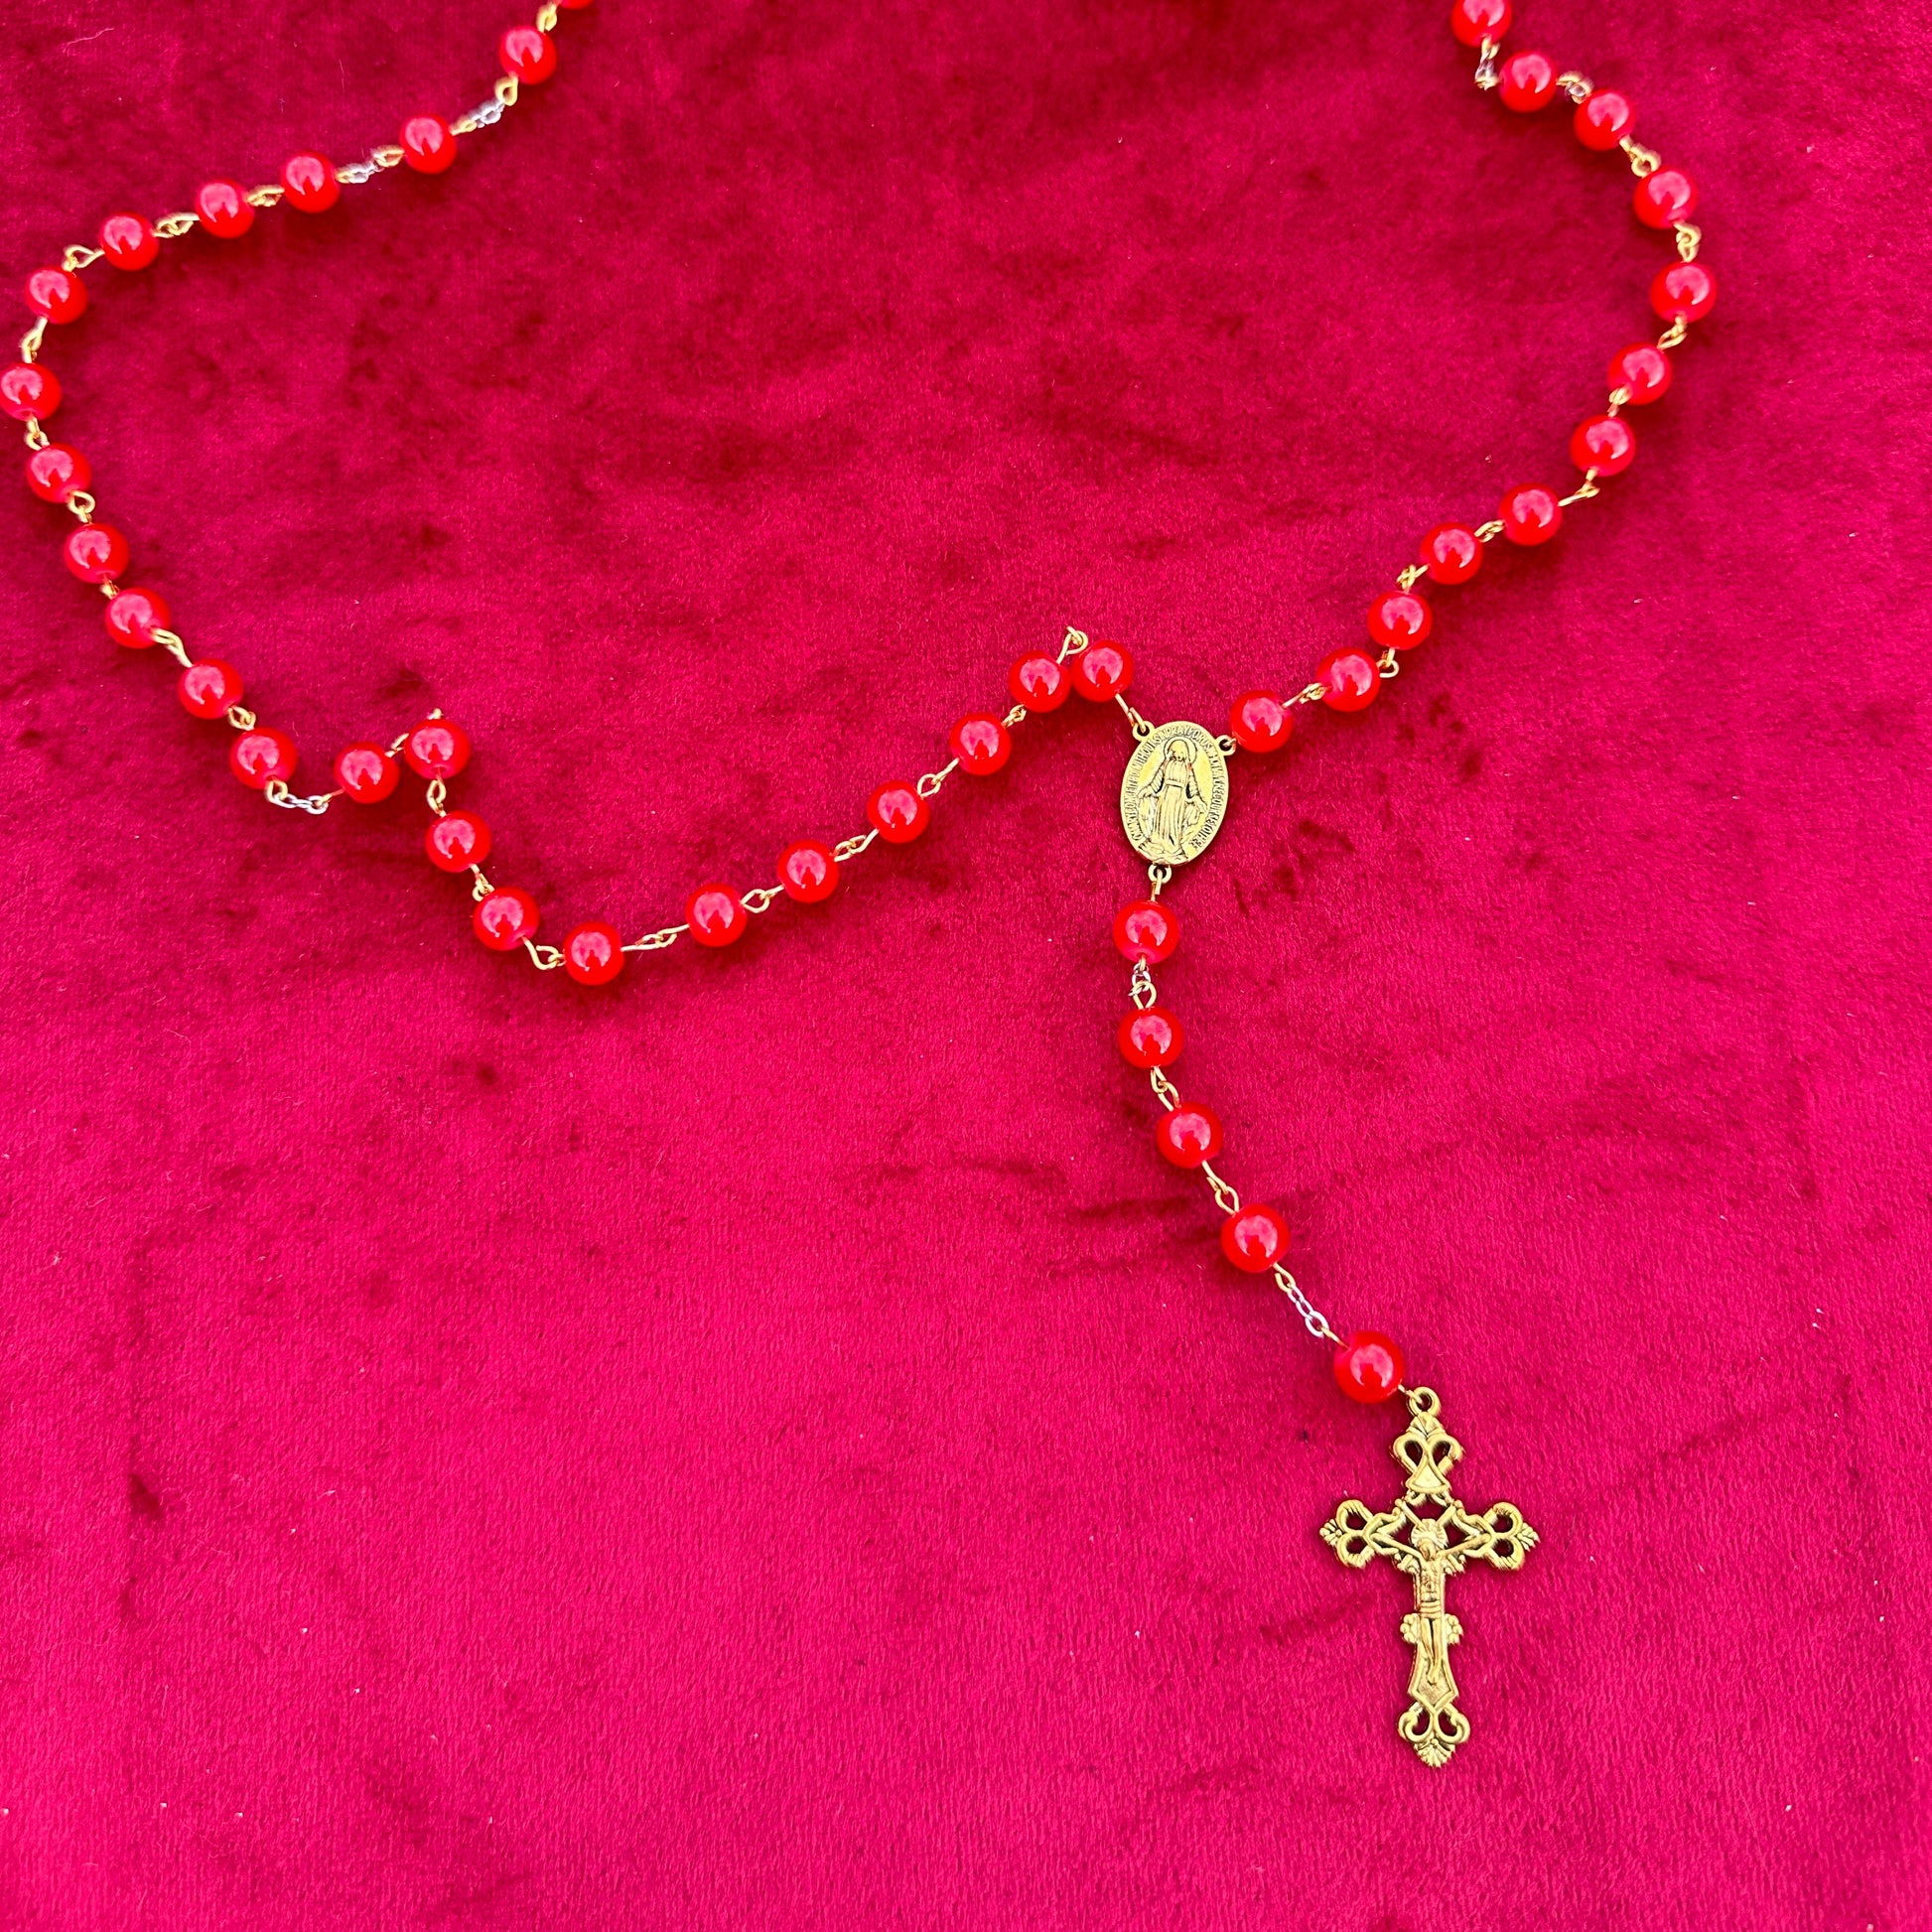 Online rosary beads buy store Catholic